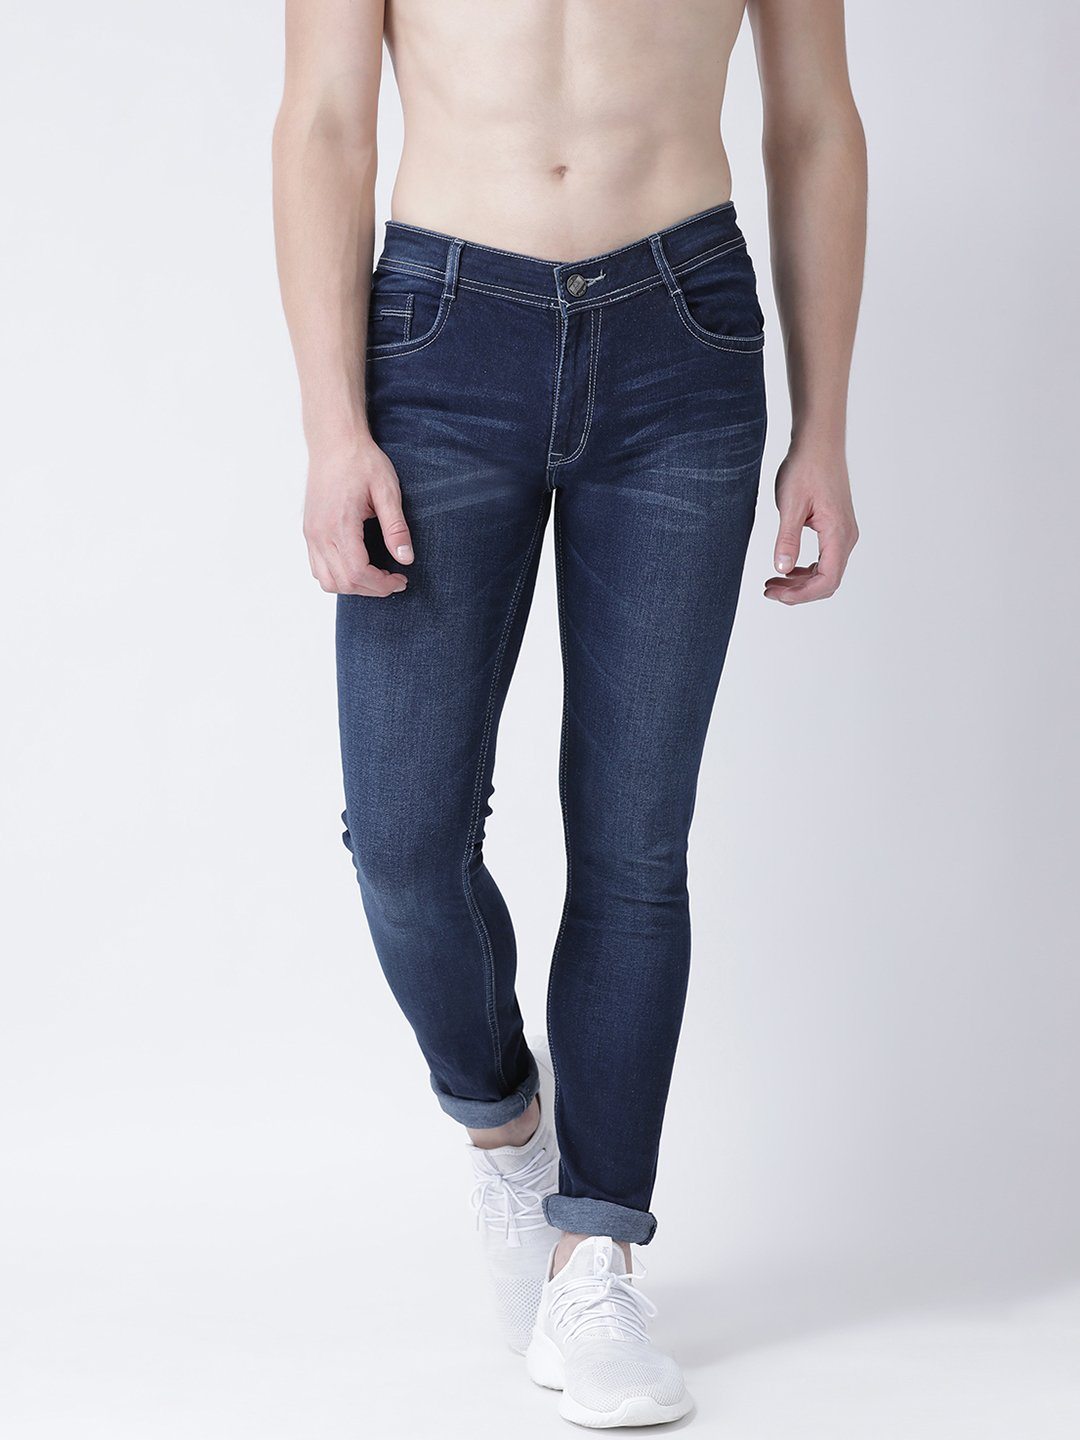 COBB Navy Blue Slim Fit Jeans - Cobbitaly.com